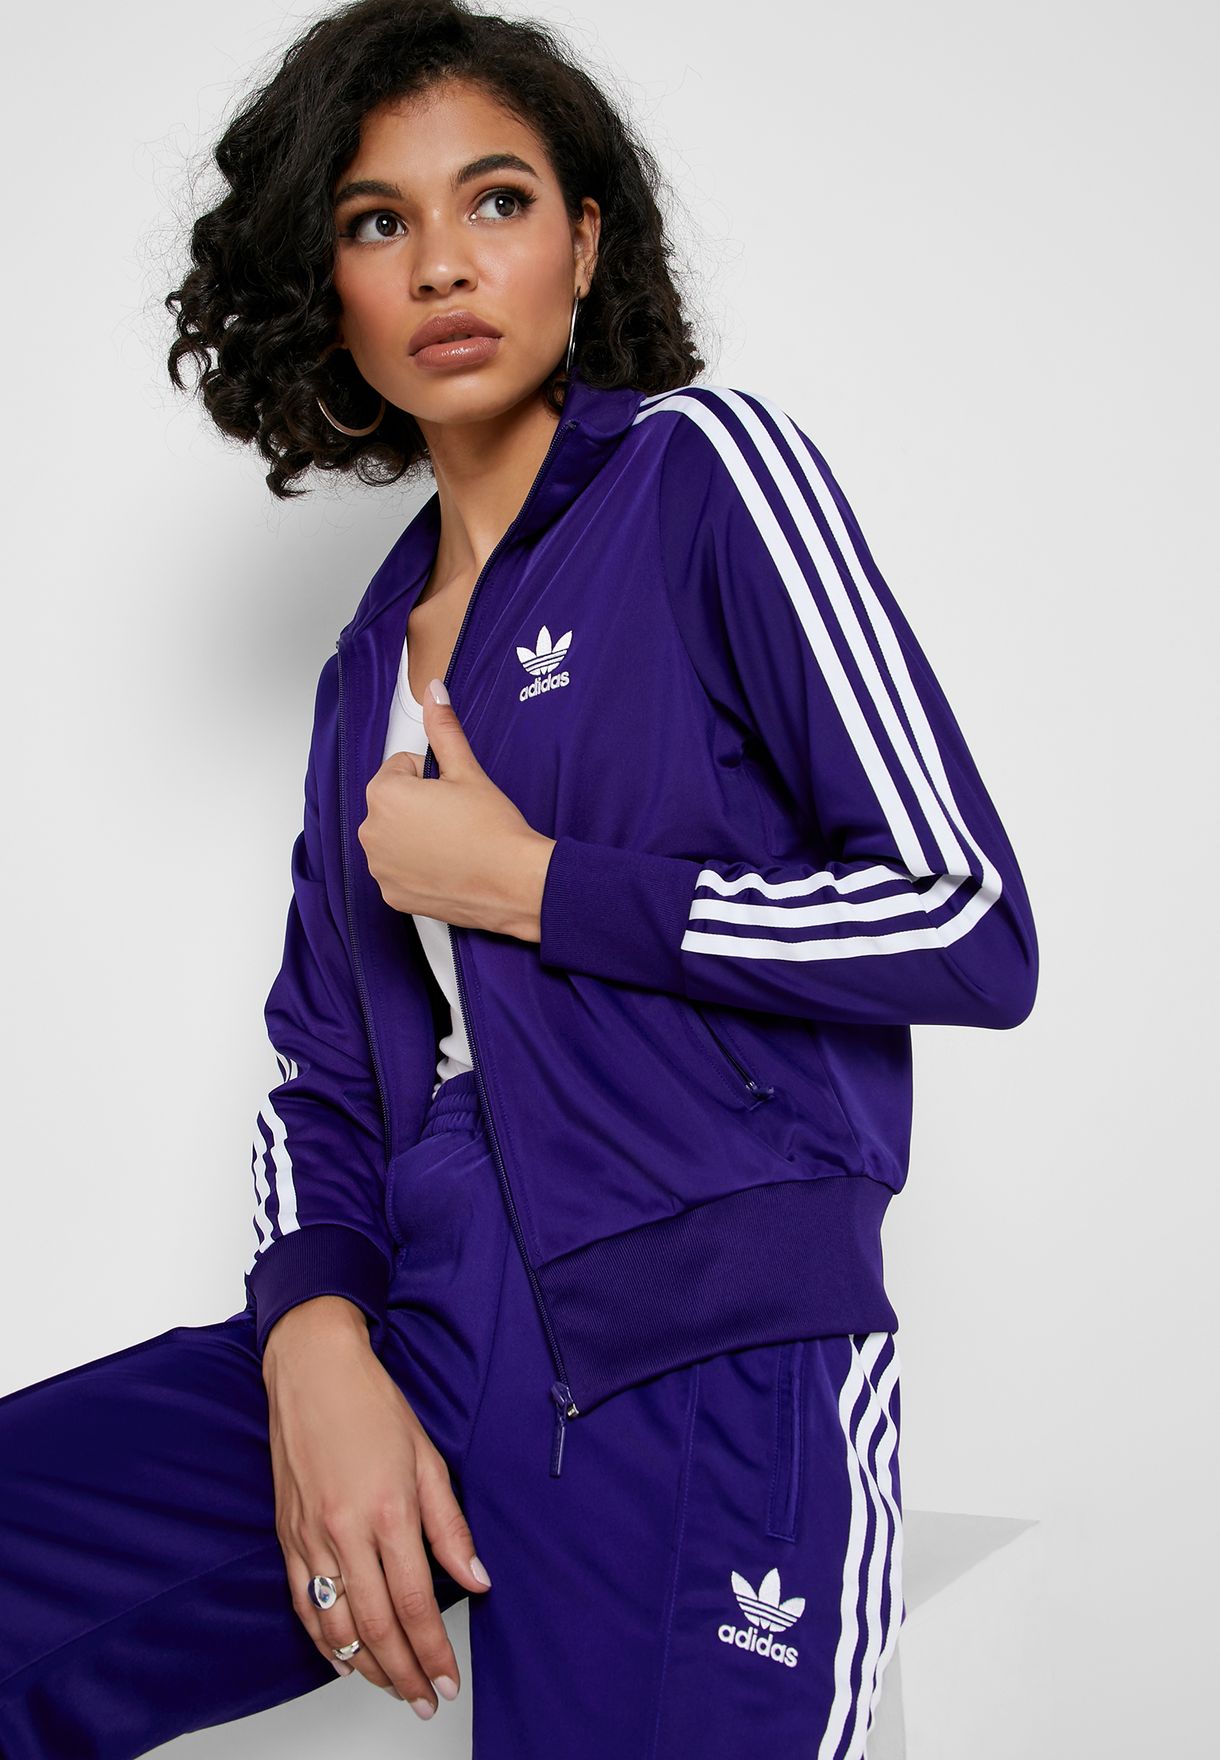 adidas purple jacket womens